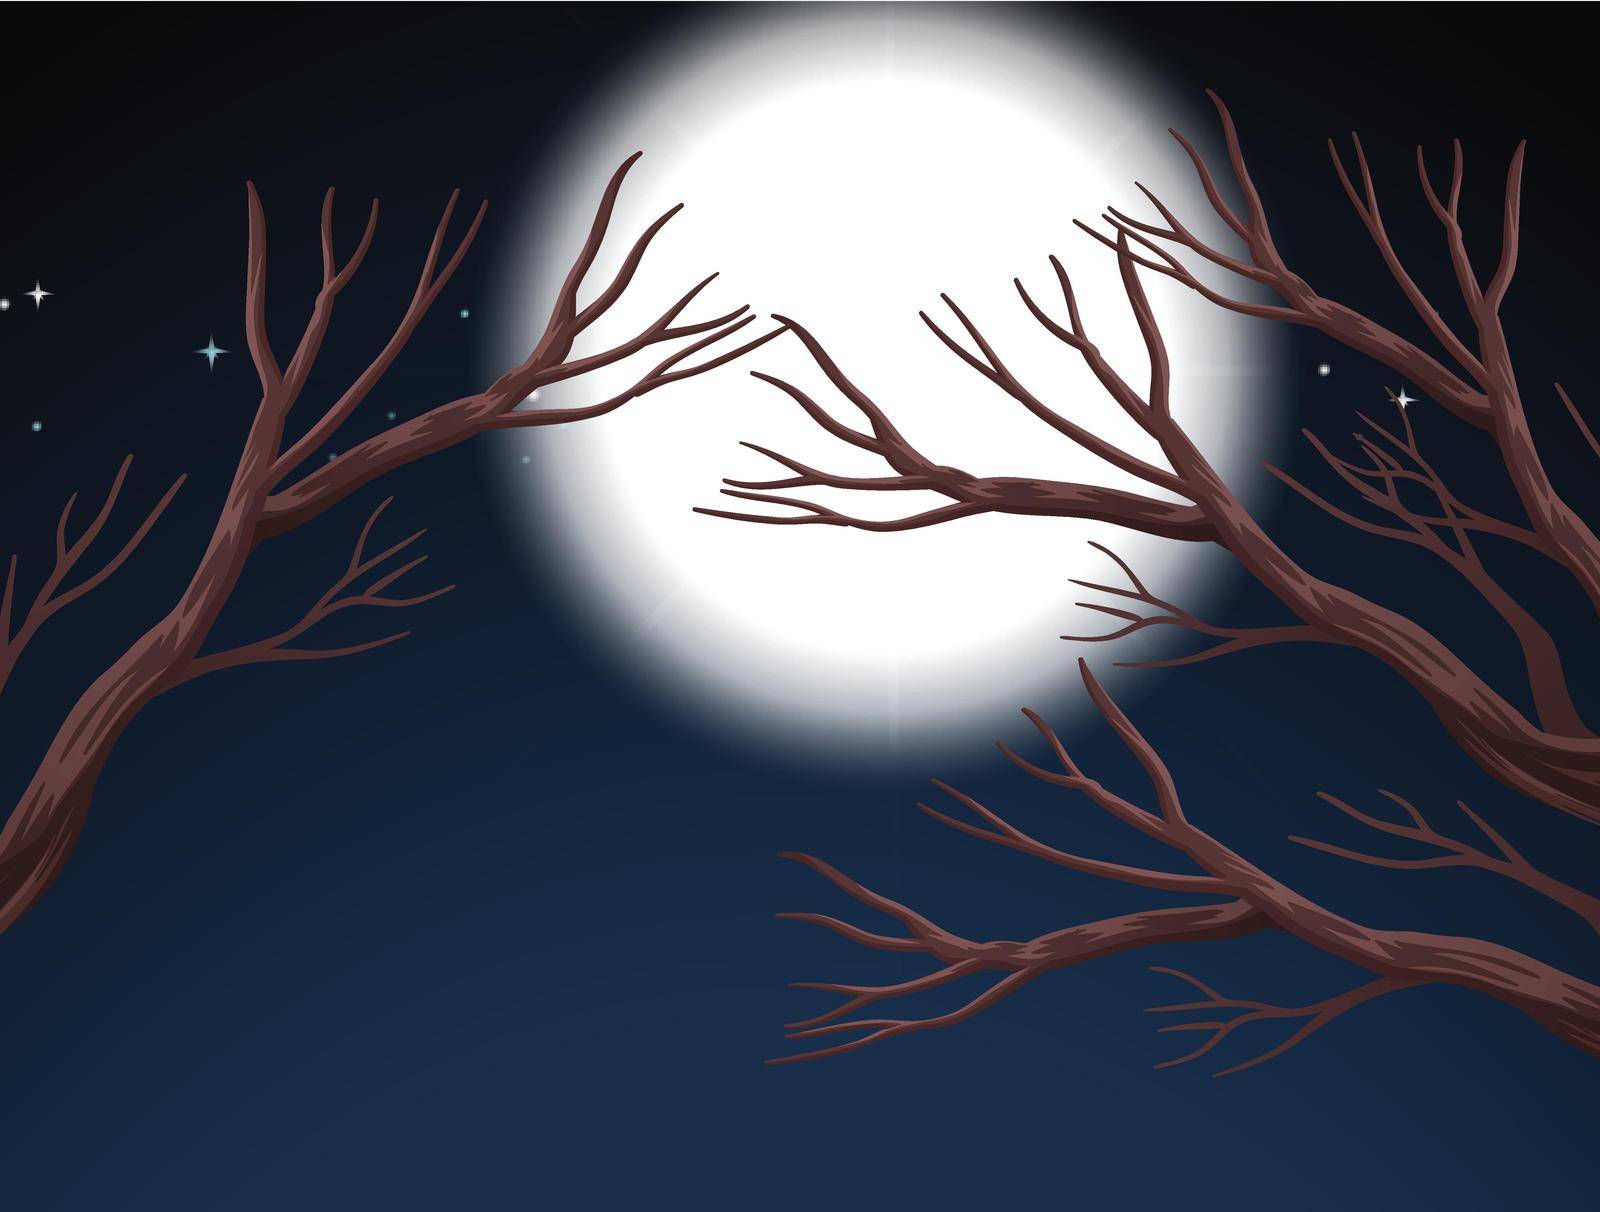 Full moon night scene illustration